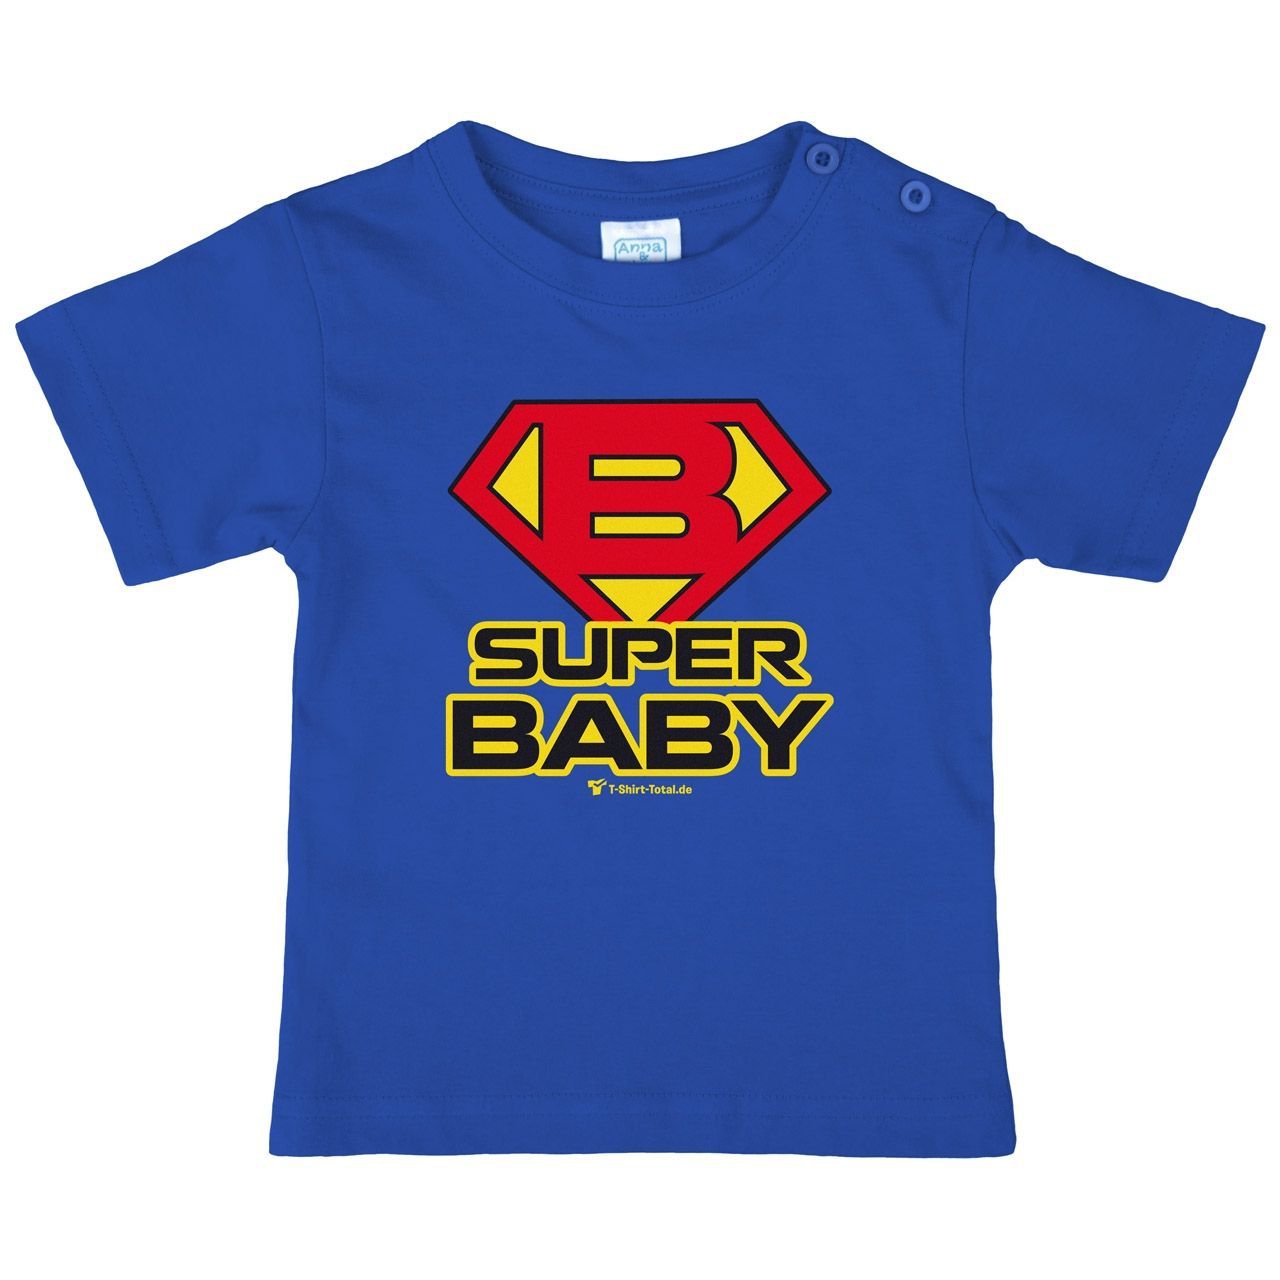 Super Baby Kinder T-Shirt royal 92